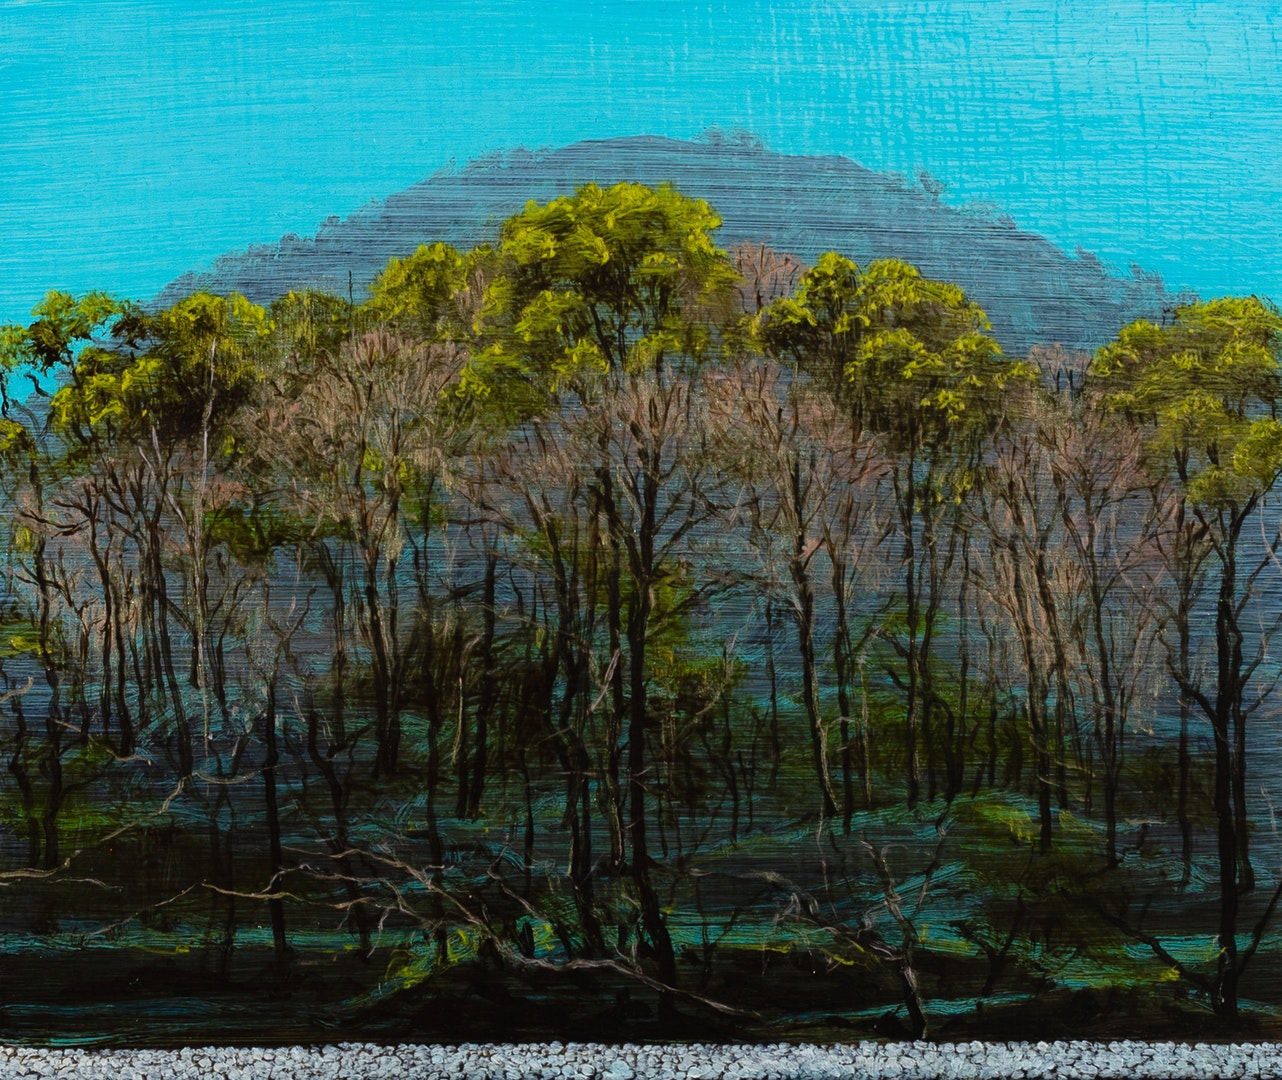 'Beginnings', Rachel McDonnell, Oil on linen, 25 x 30 cm